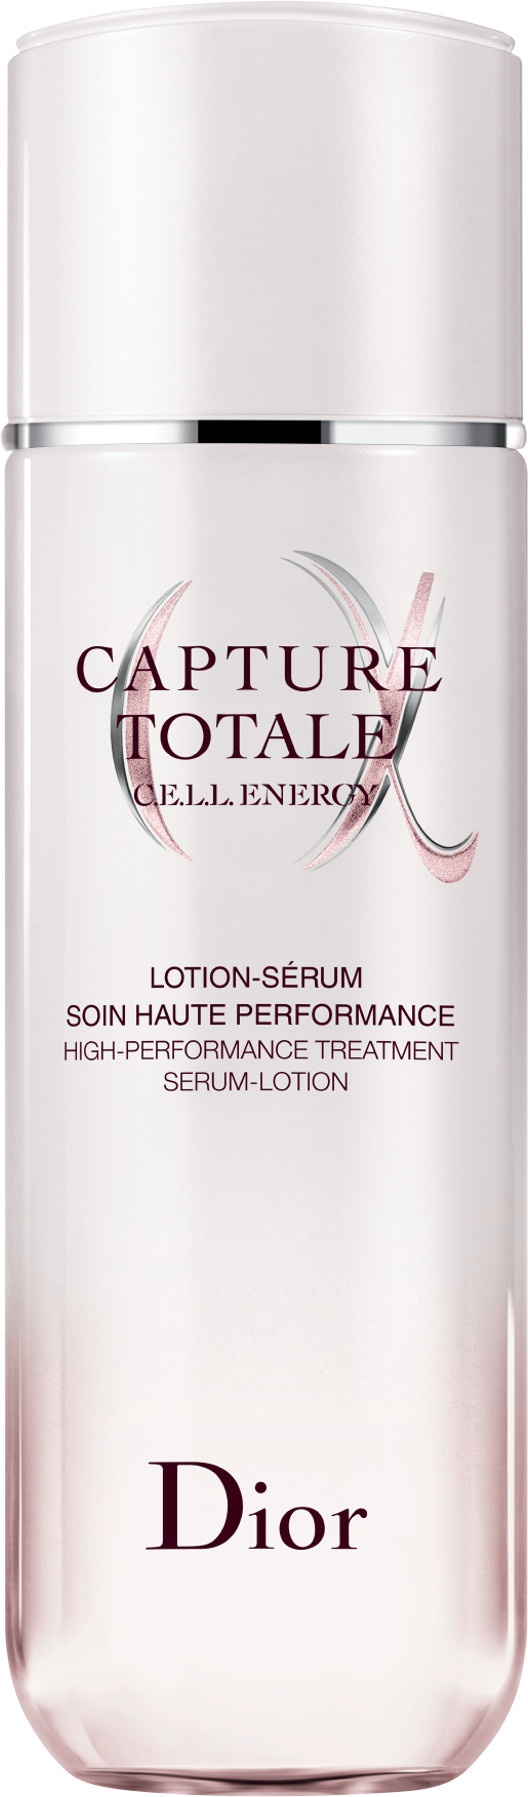 Dior Capture Totale C.E.L.L. Energy* High-Performance Treatment Serum-Lotion